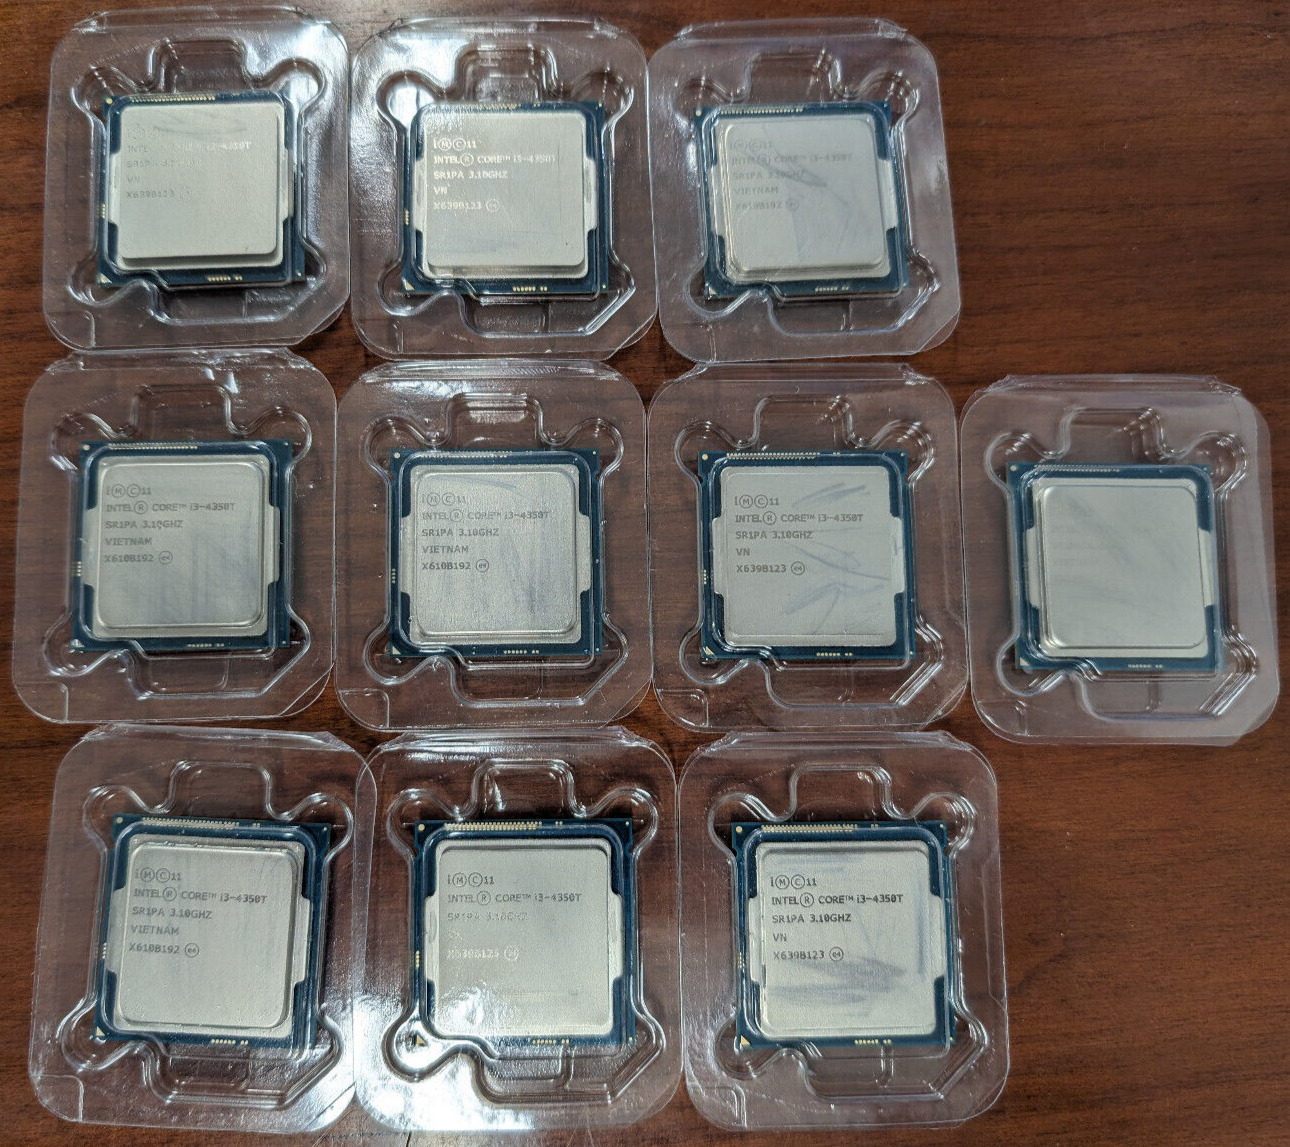 Lot of 10 Intel Core i3-4350T 3.10GHz Dual-Core CPU Processor SR1PA LGA1150 35W